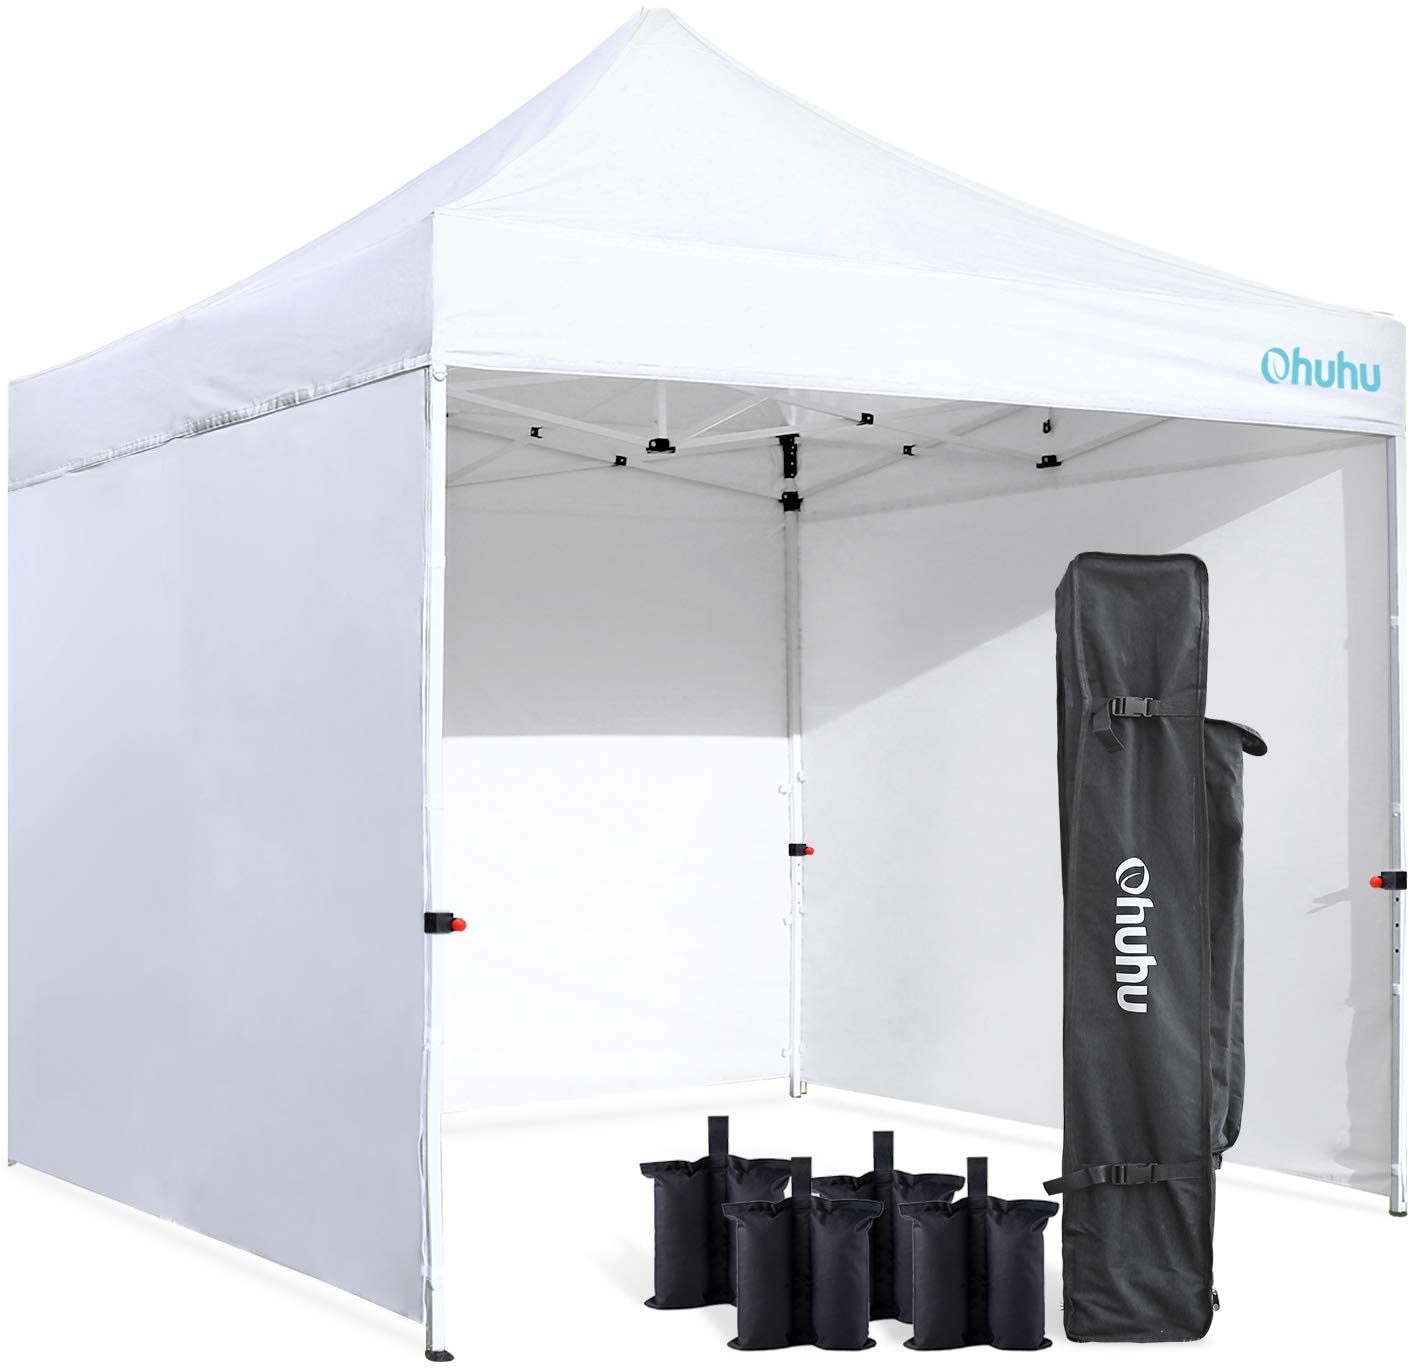 Ohuhu Pop-Up Canopy Tent With Zipper Sidewalls